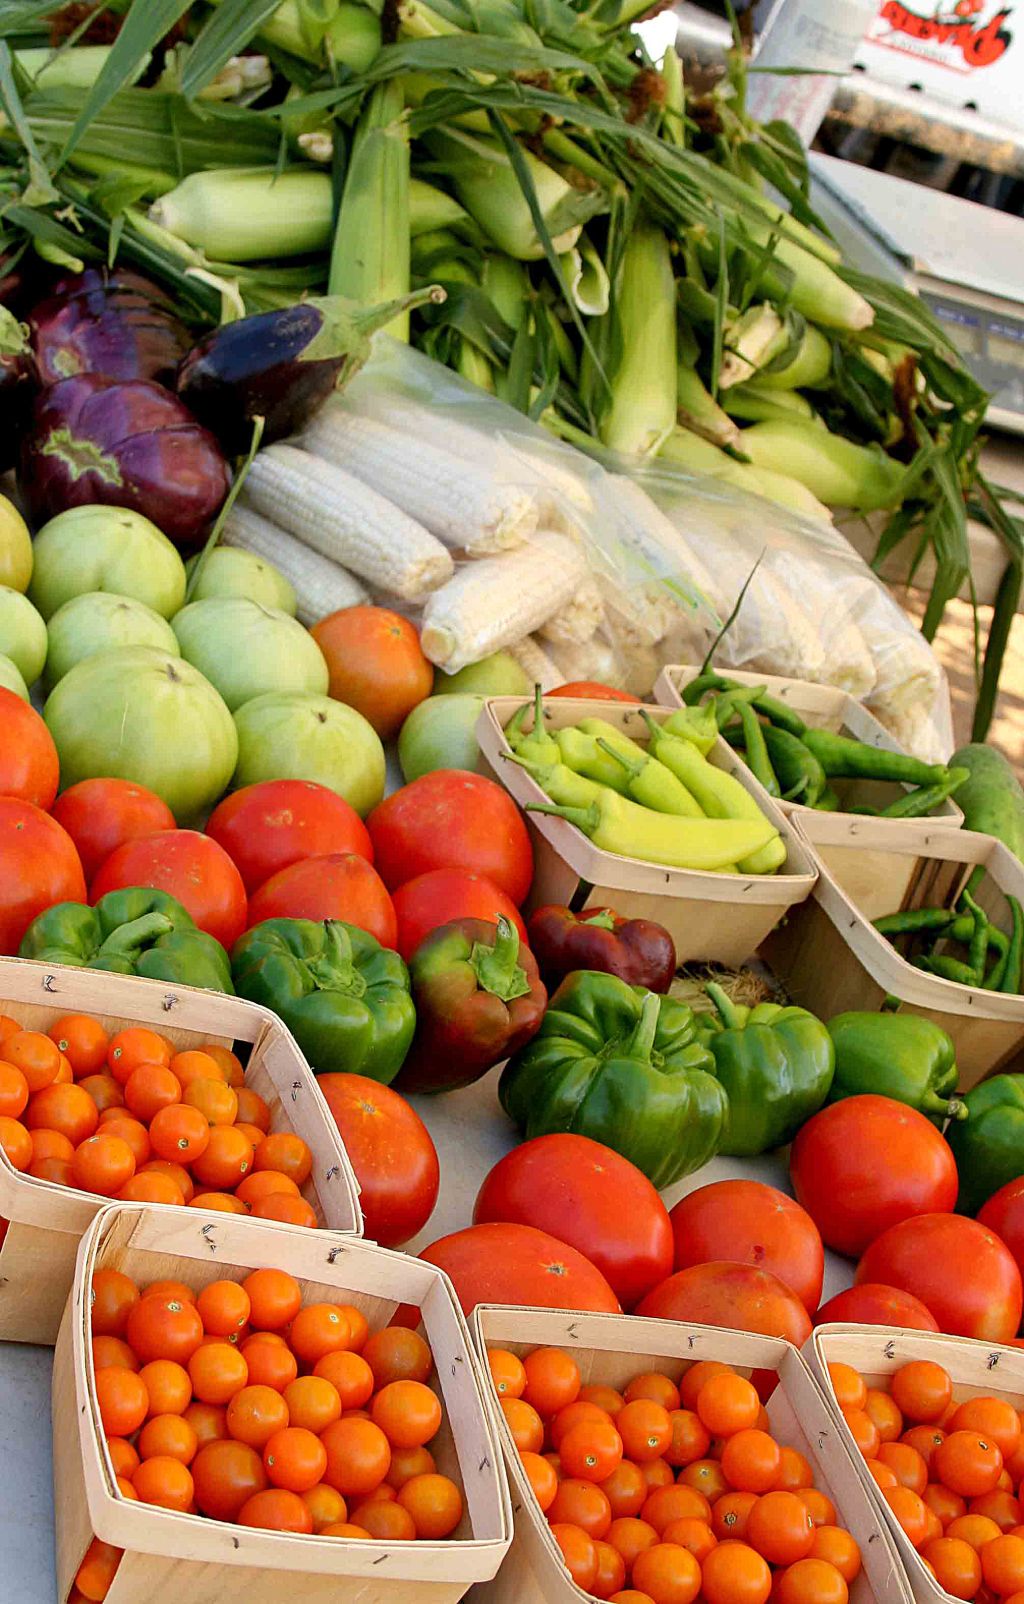 Vegetables in farmers market